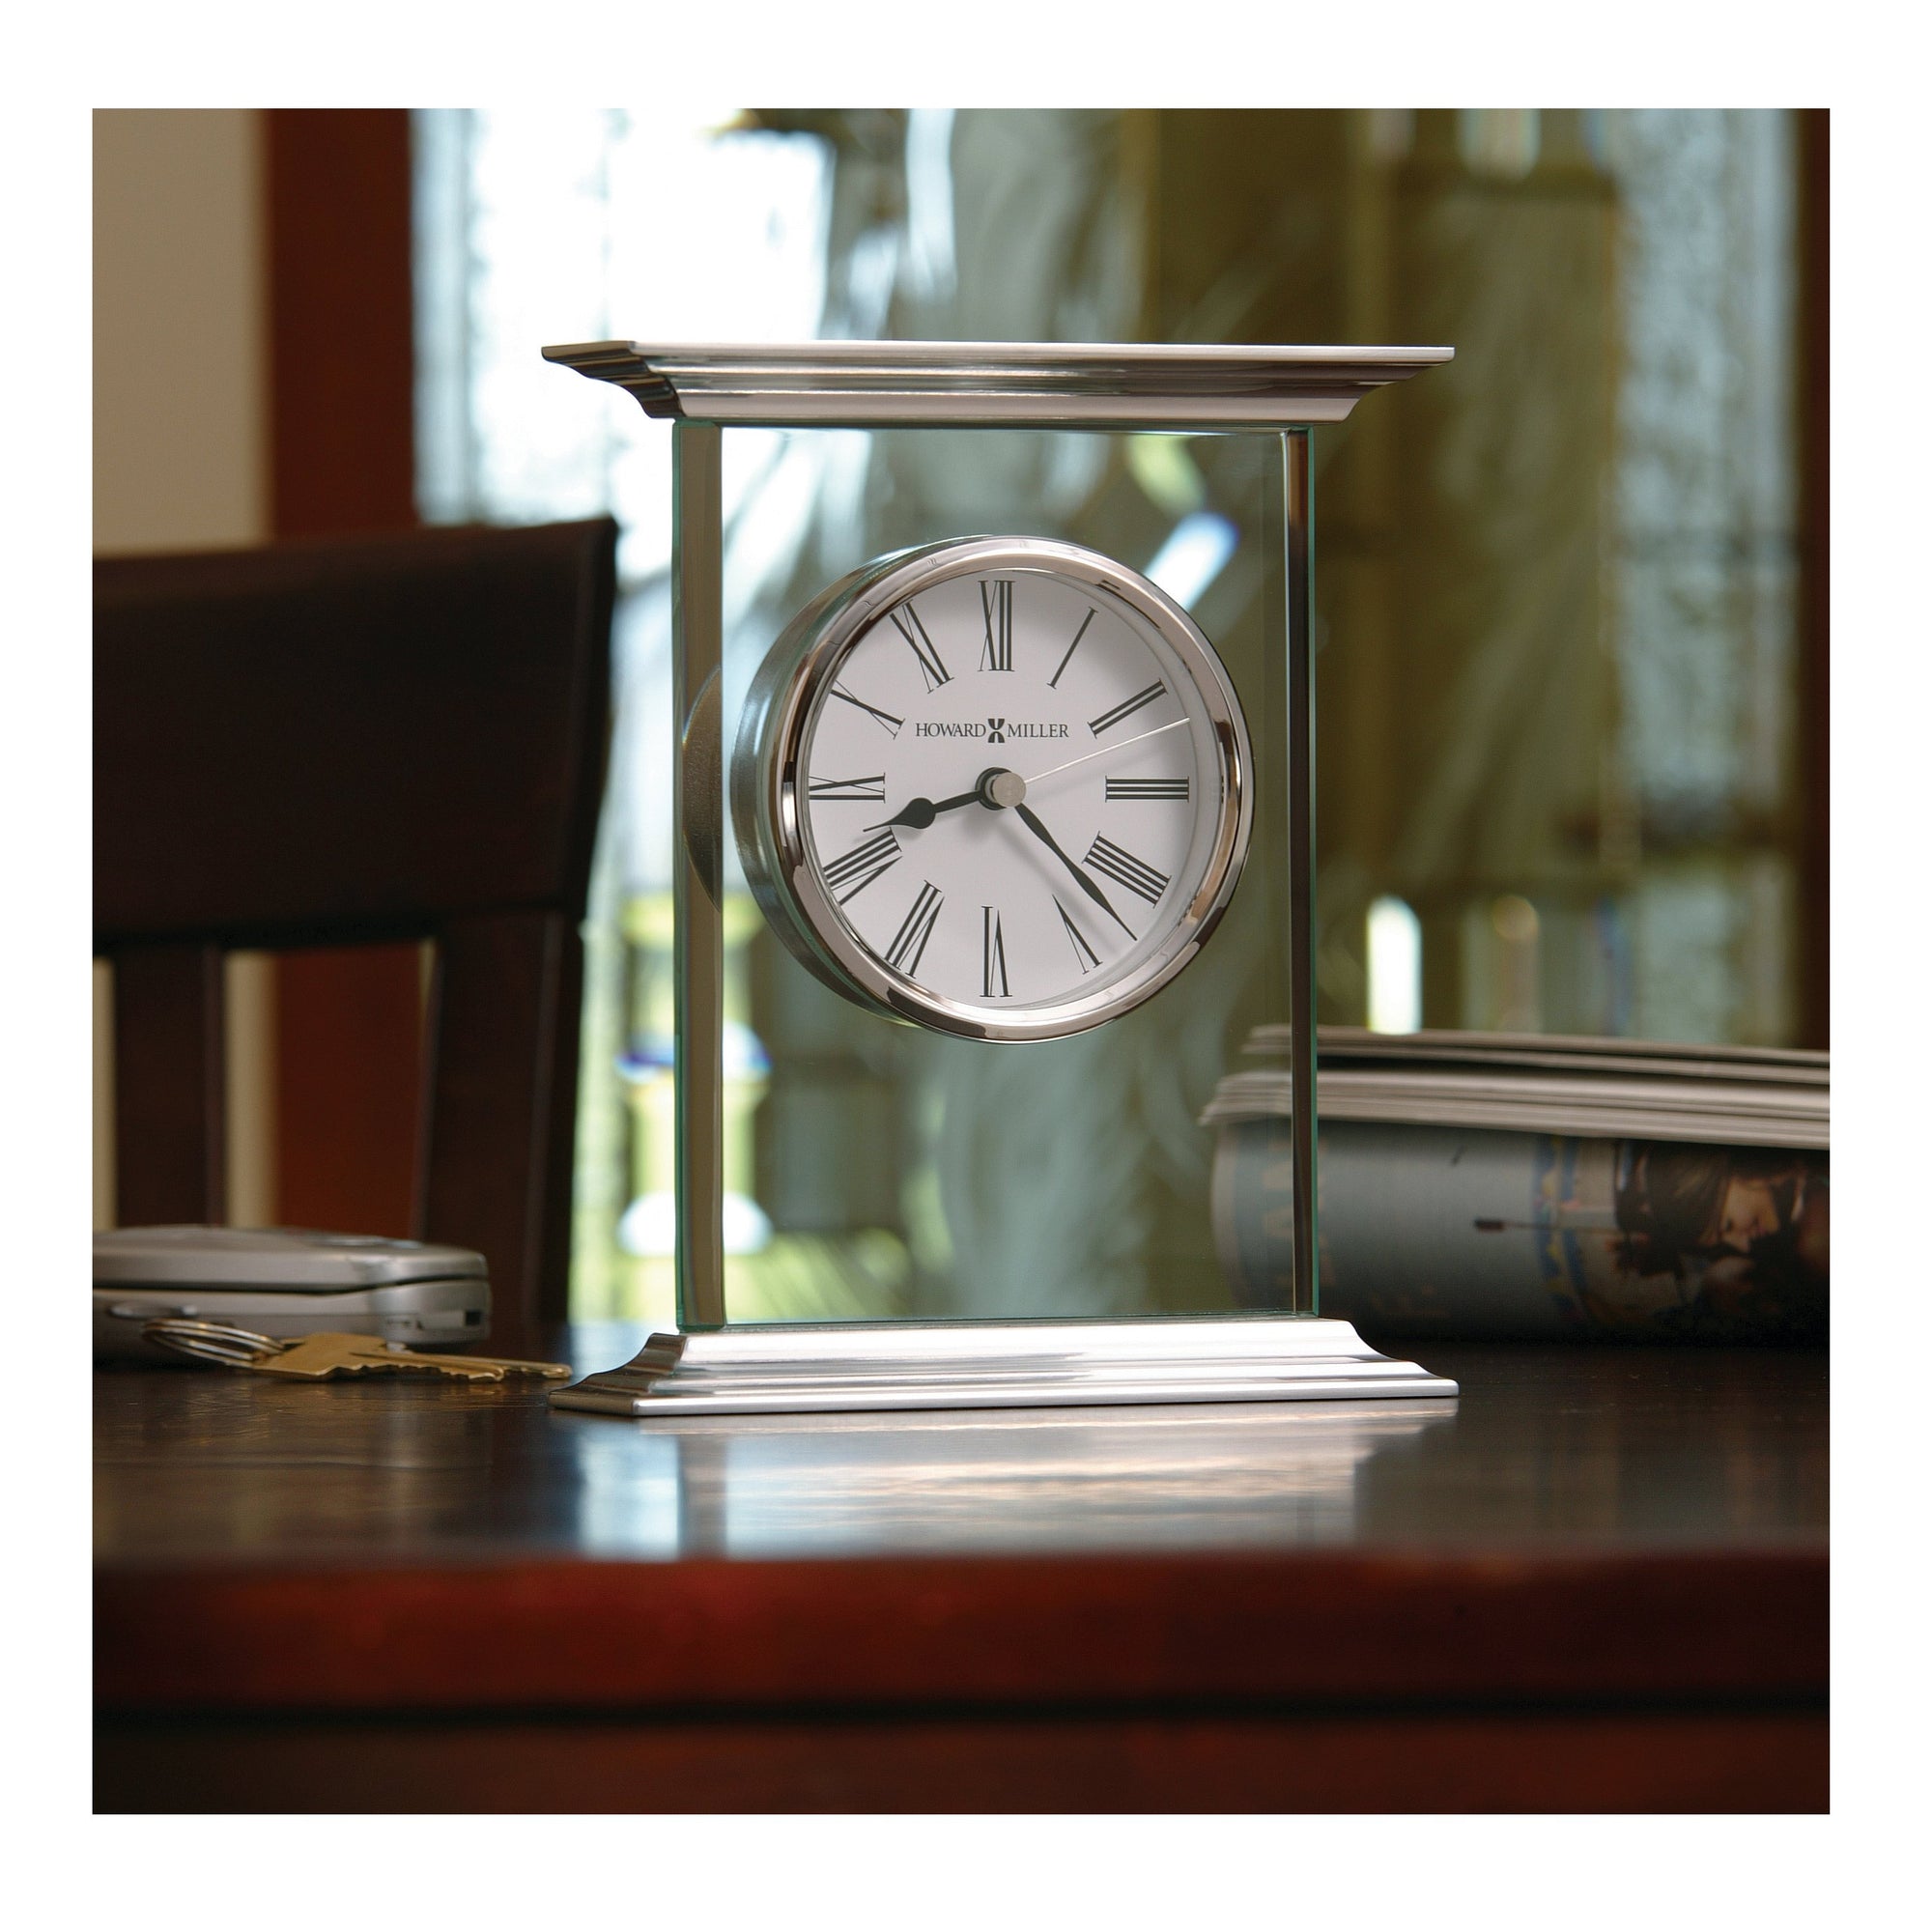 Howard Miller Clifton Table Clock 645641 - Premier Clocks